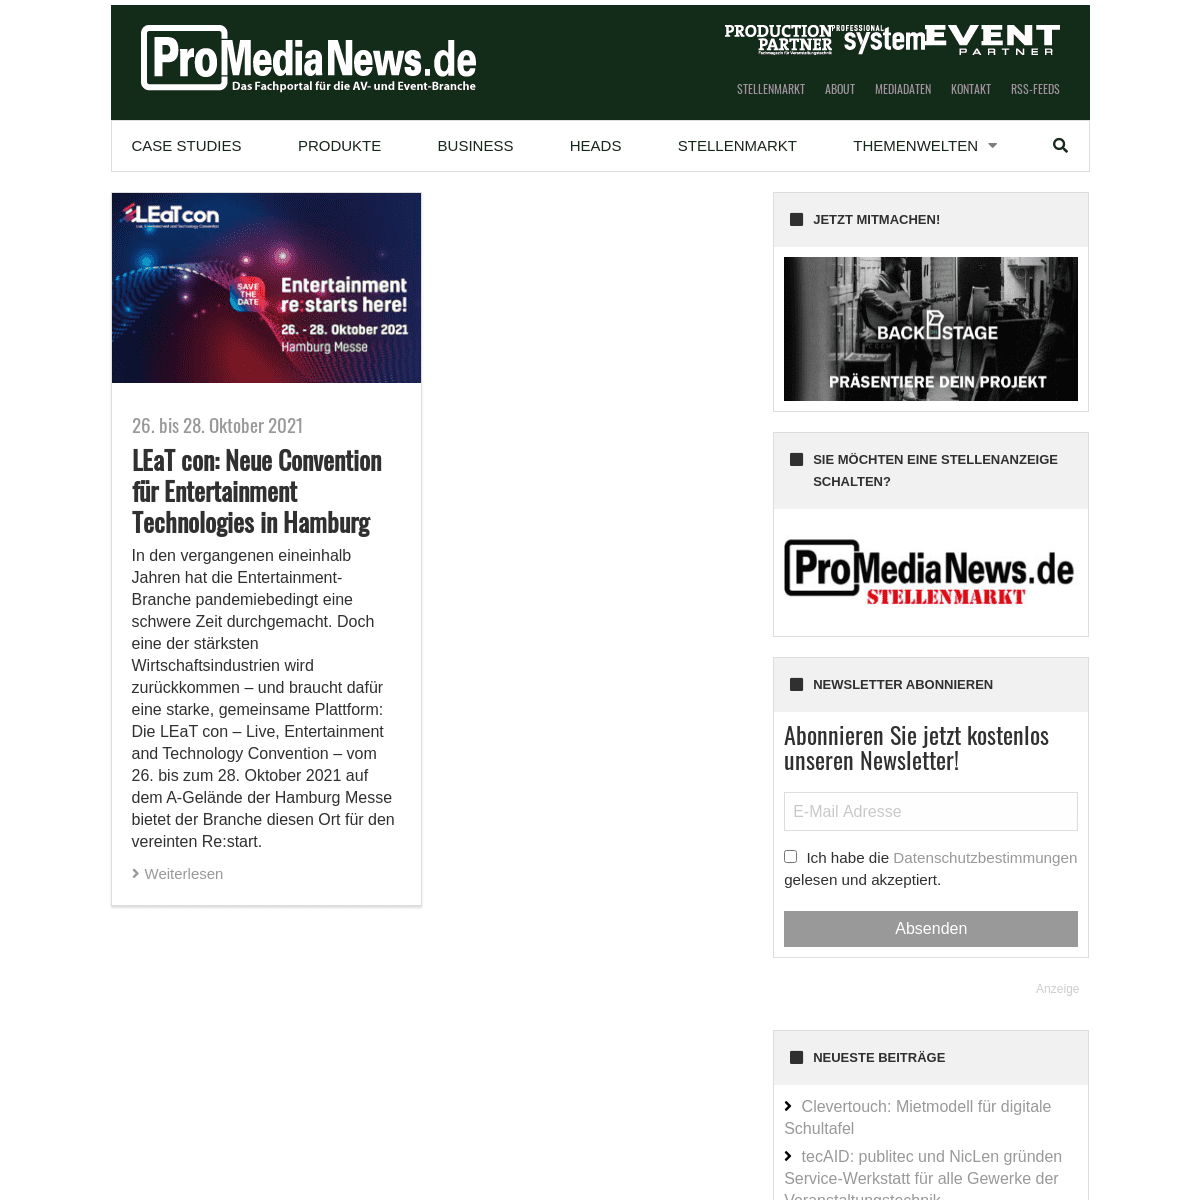 A complete backup of https://promedianews.de